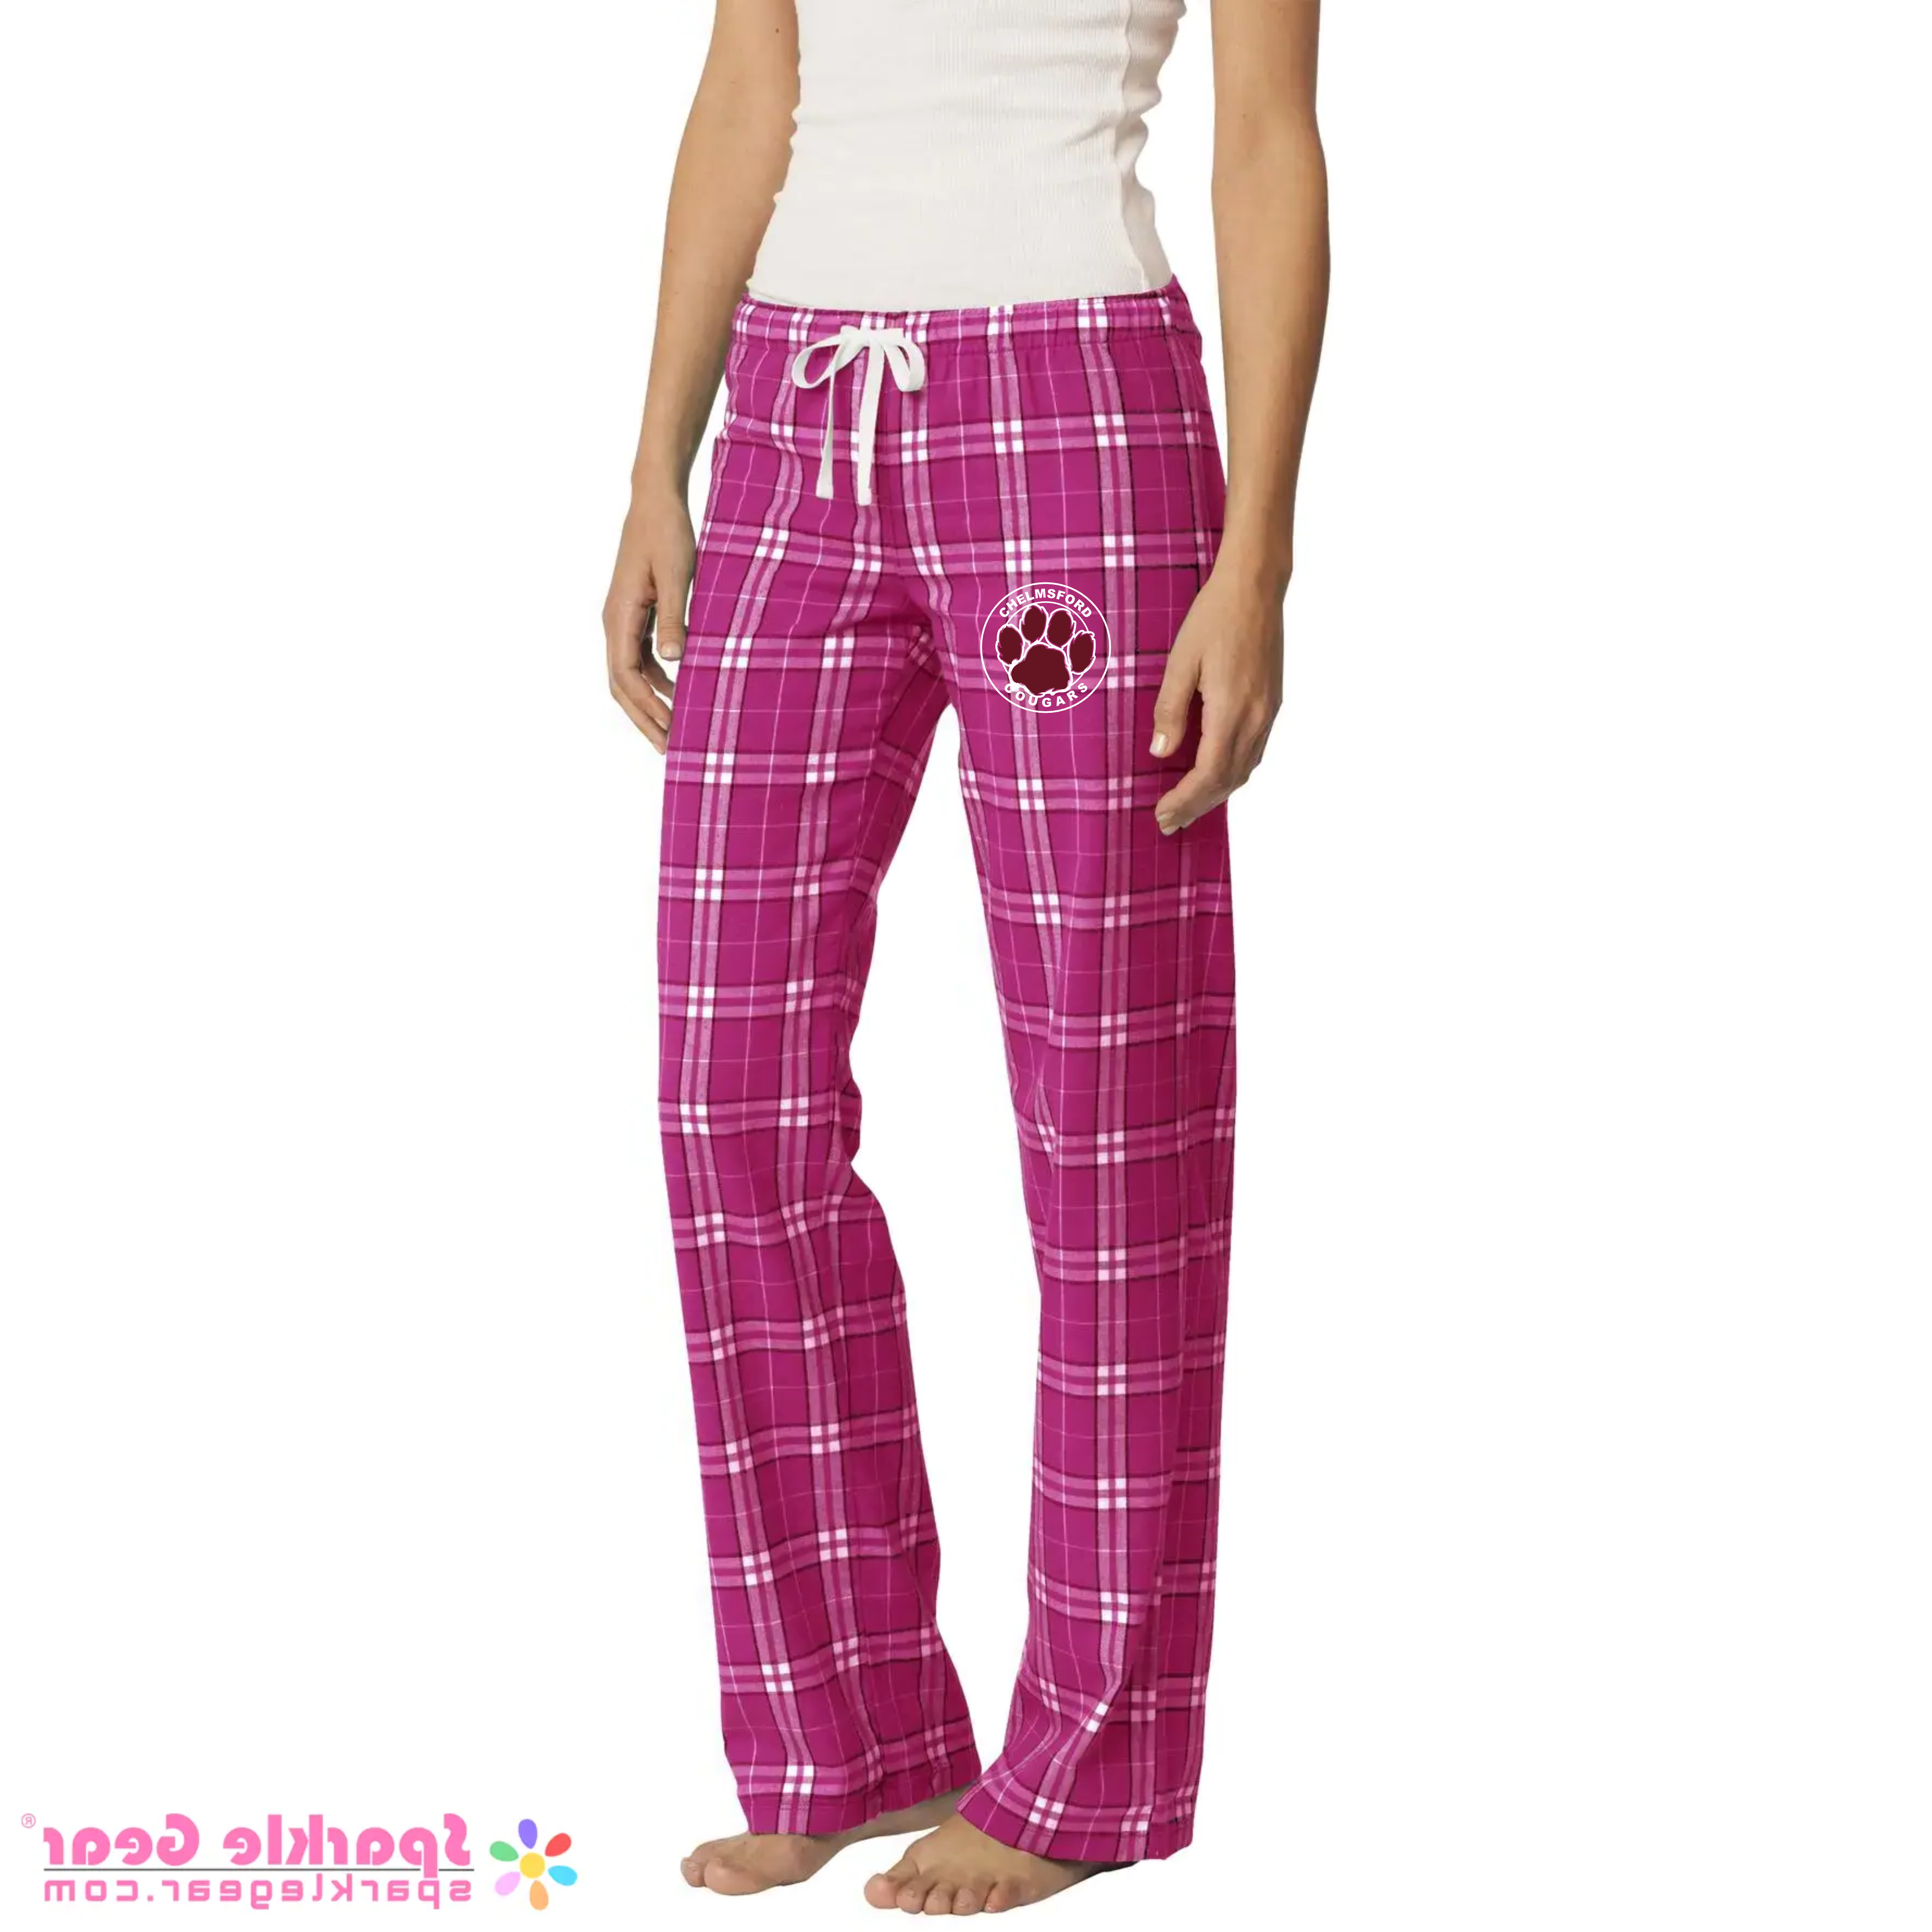 Gg Western Girls Brand Pajama Set - Ropes and Rhinestones